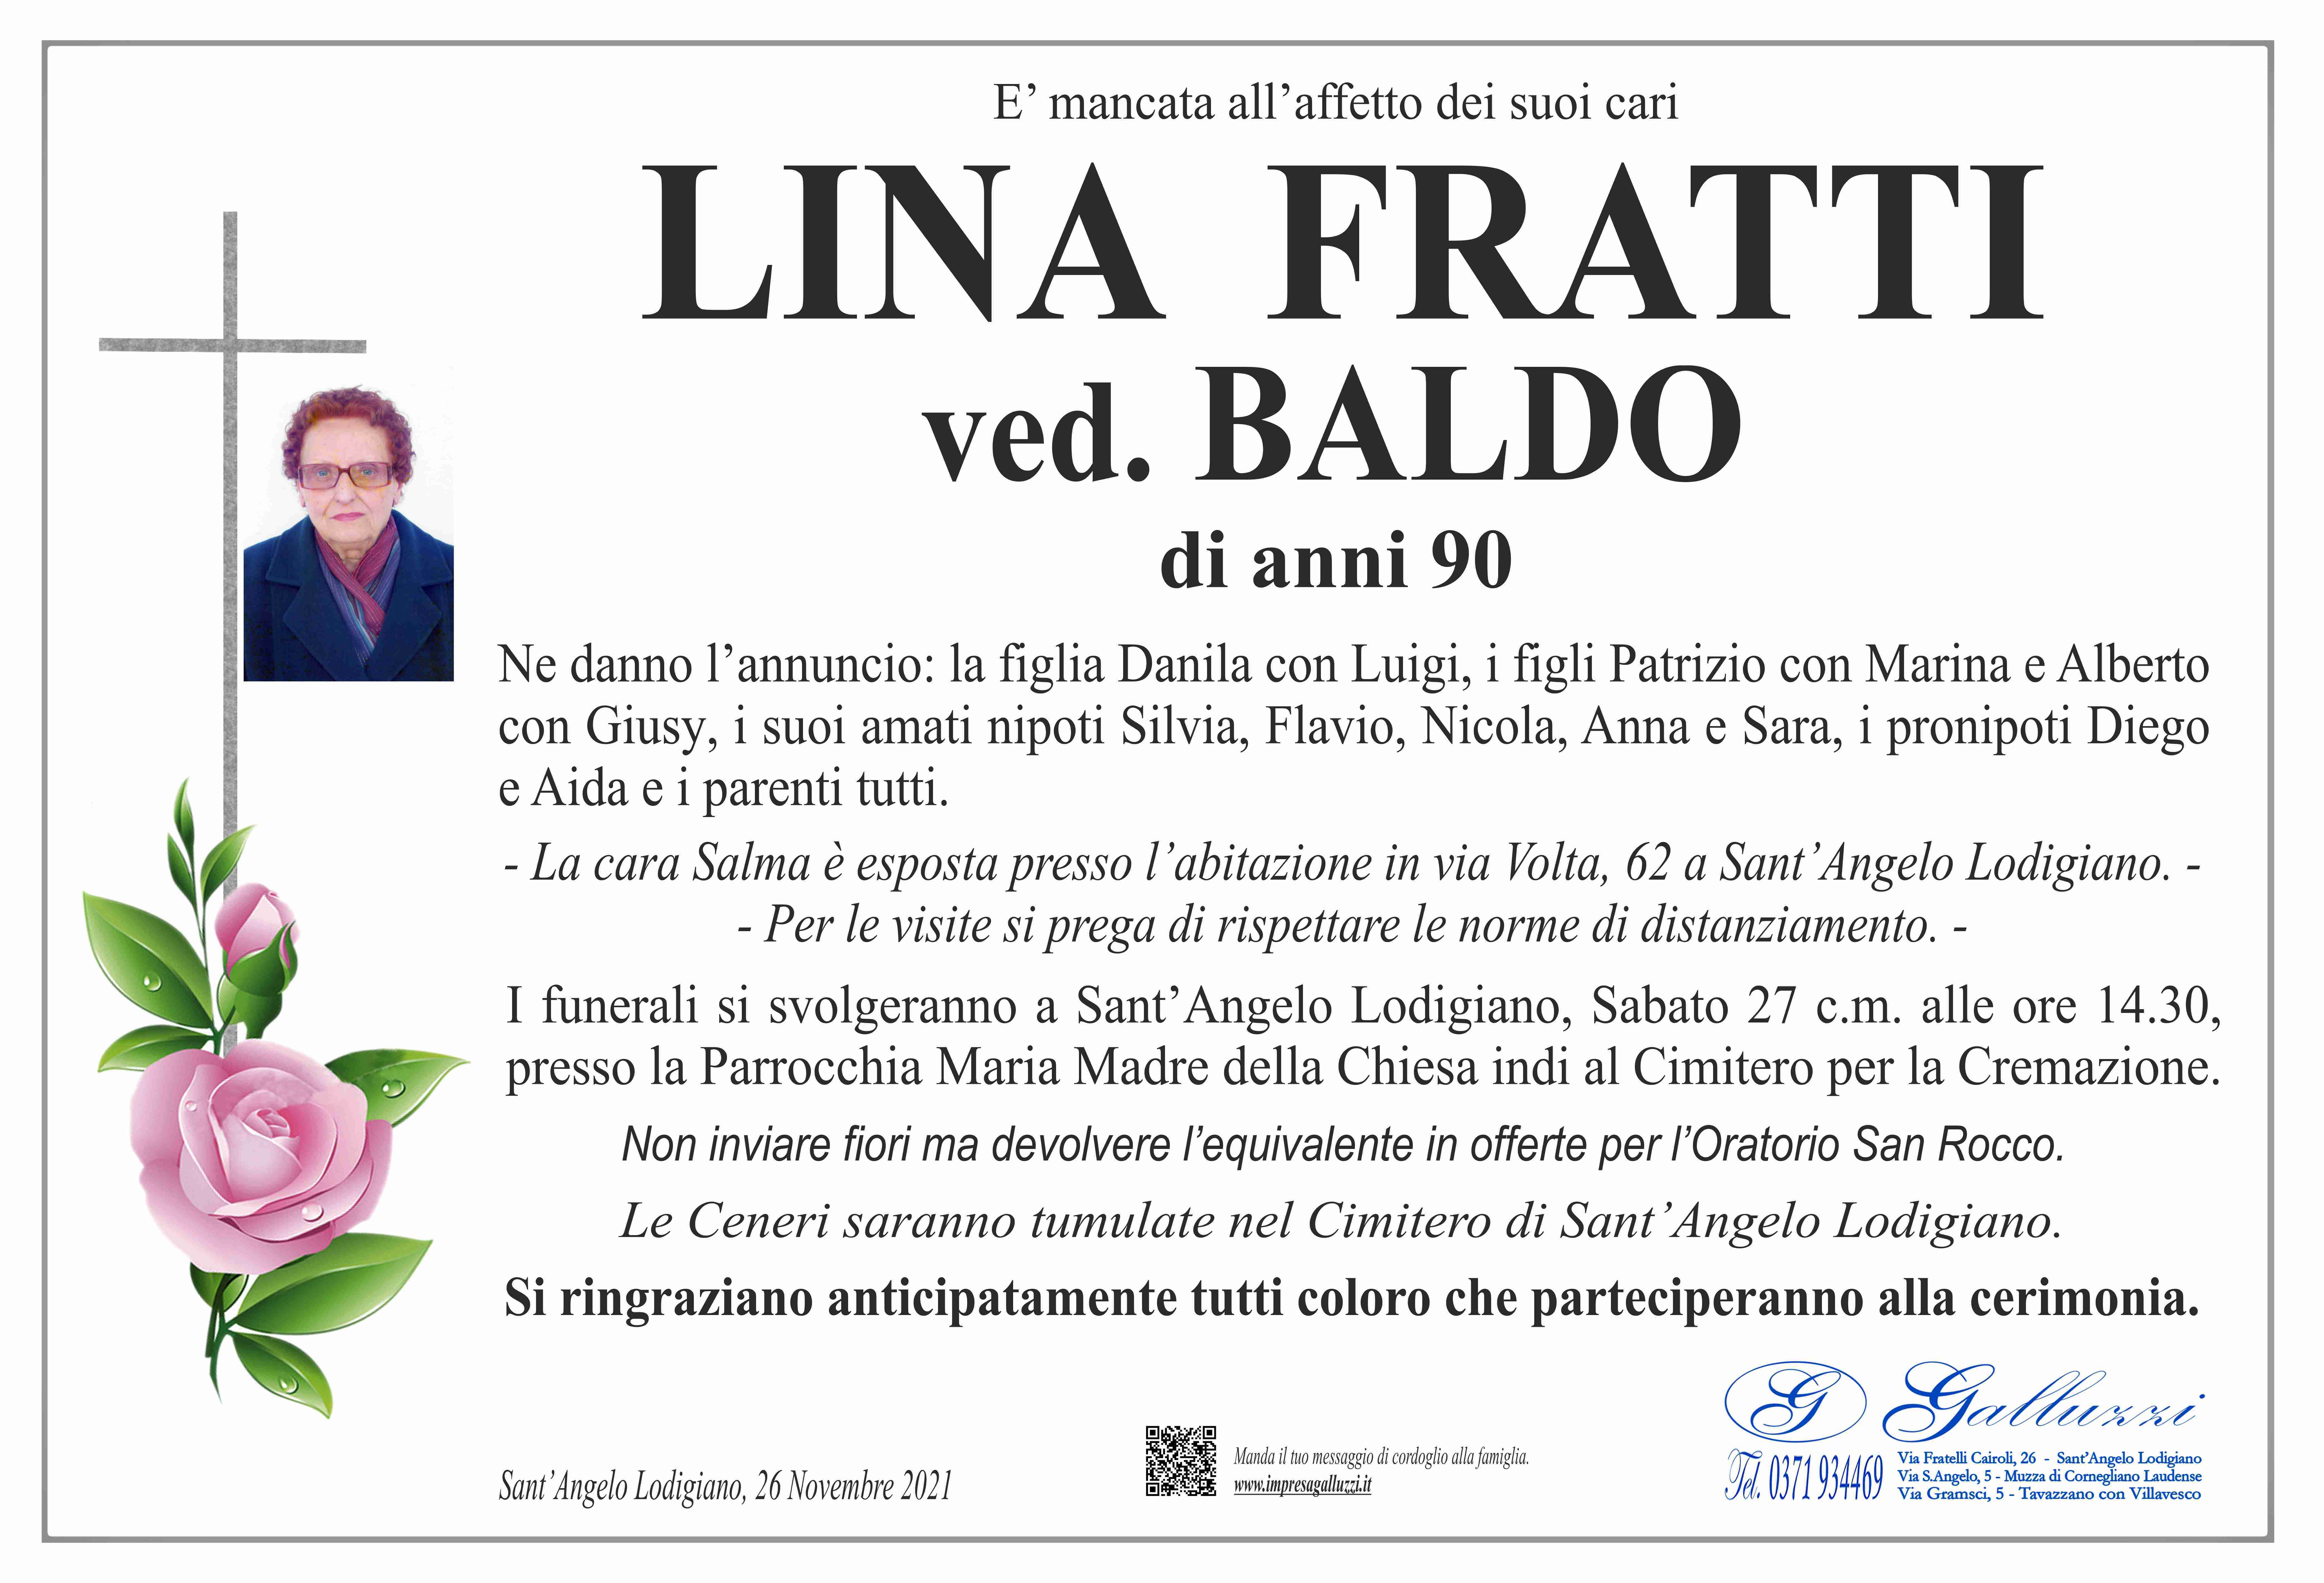 Lina Fratti